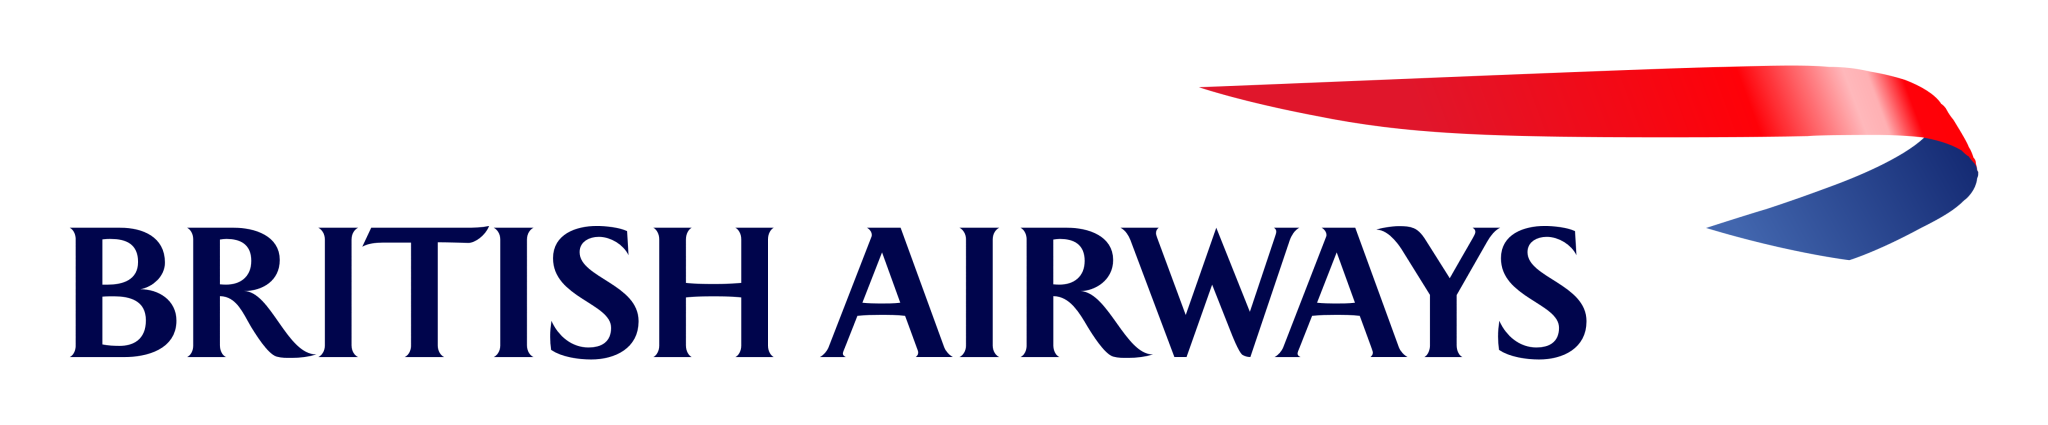 Kenya Airways Logo PNG Download - Bootflare